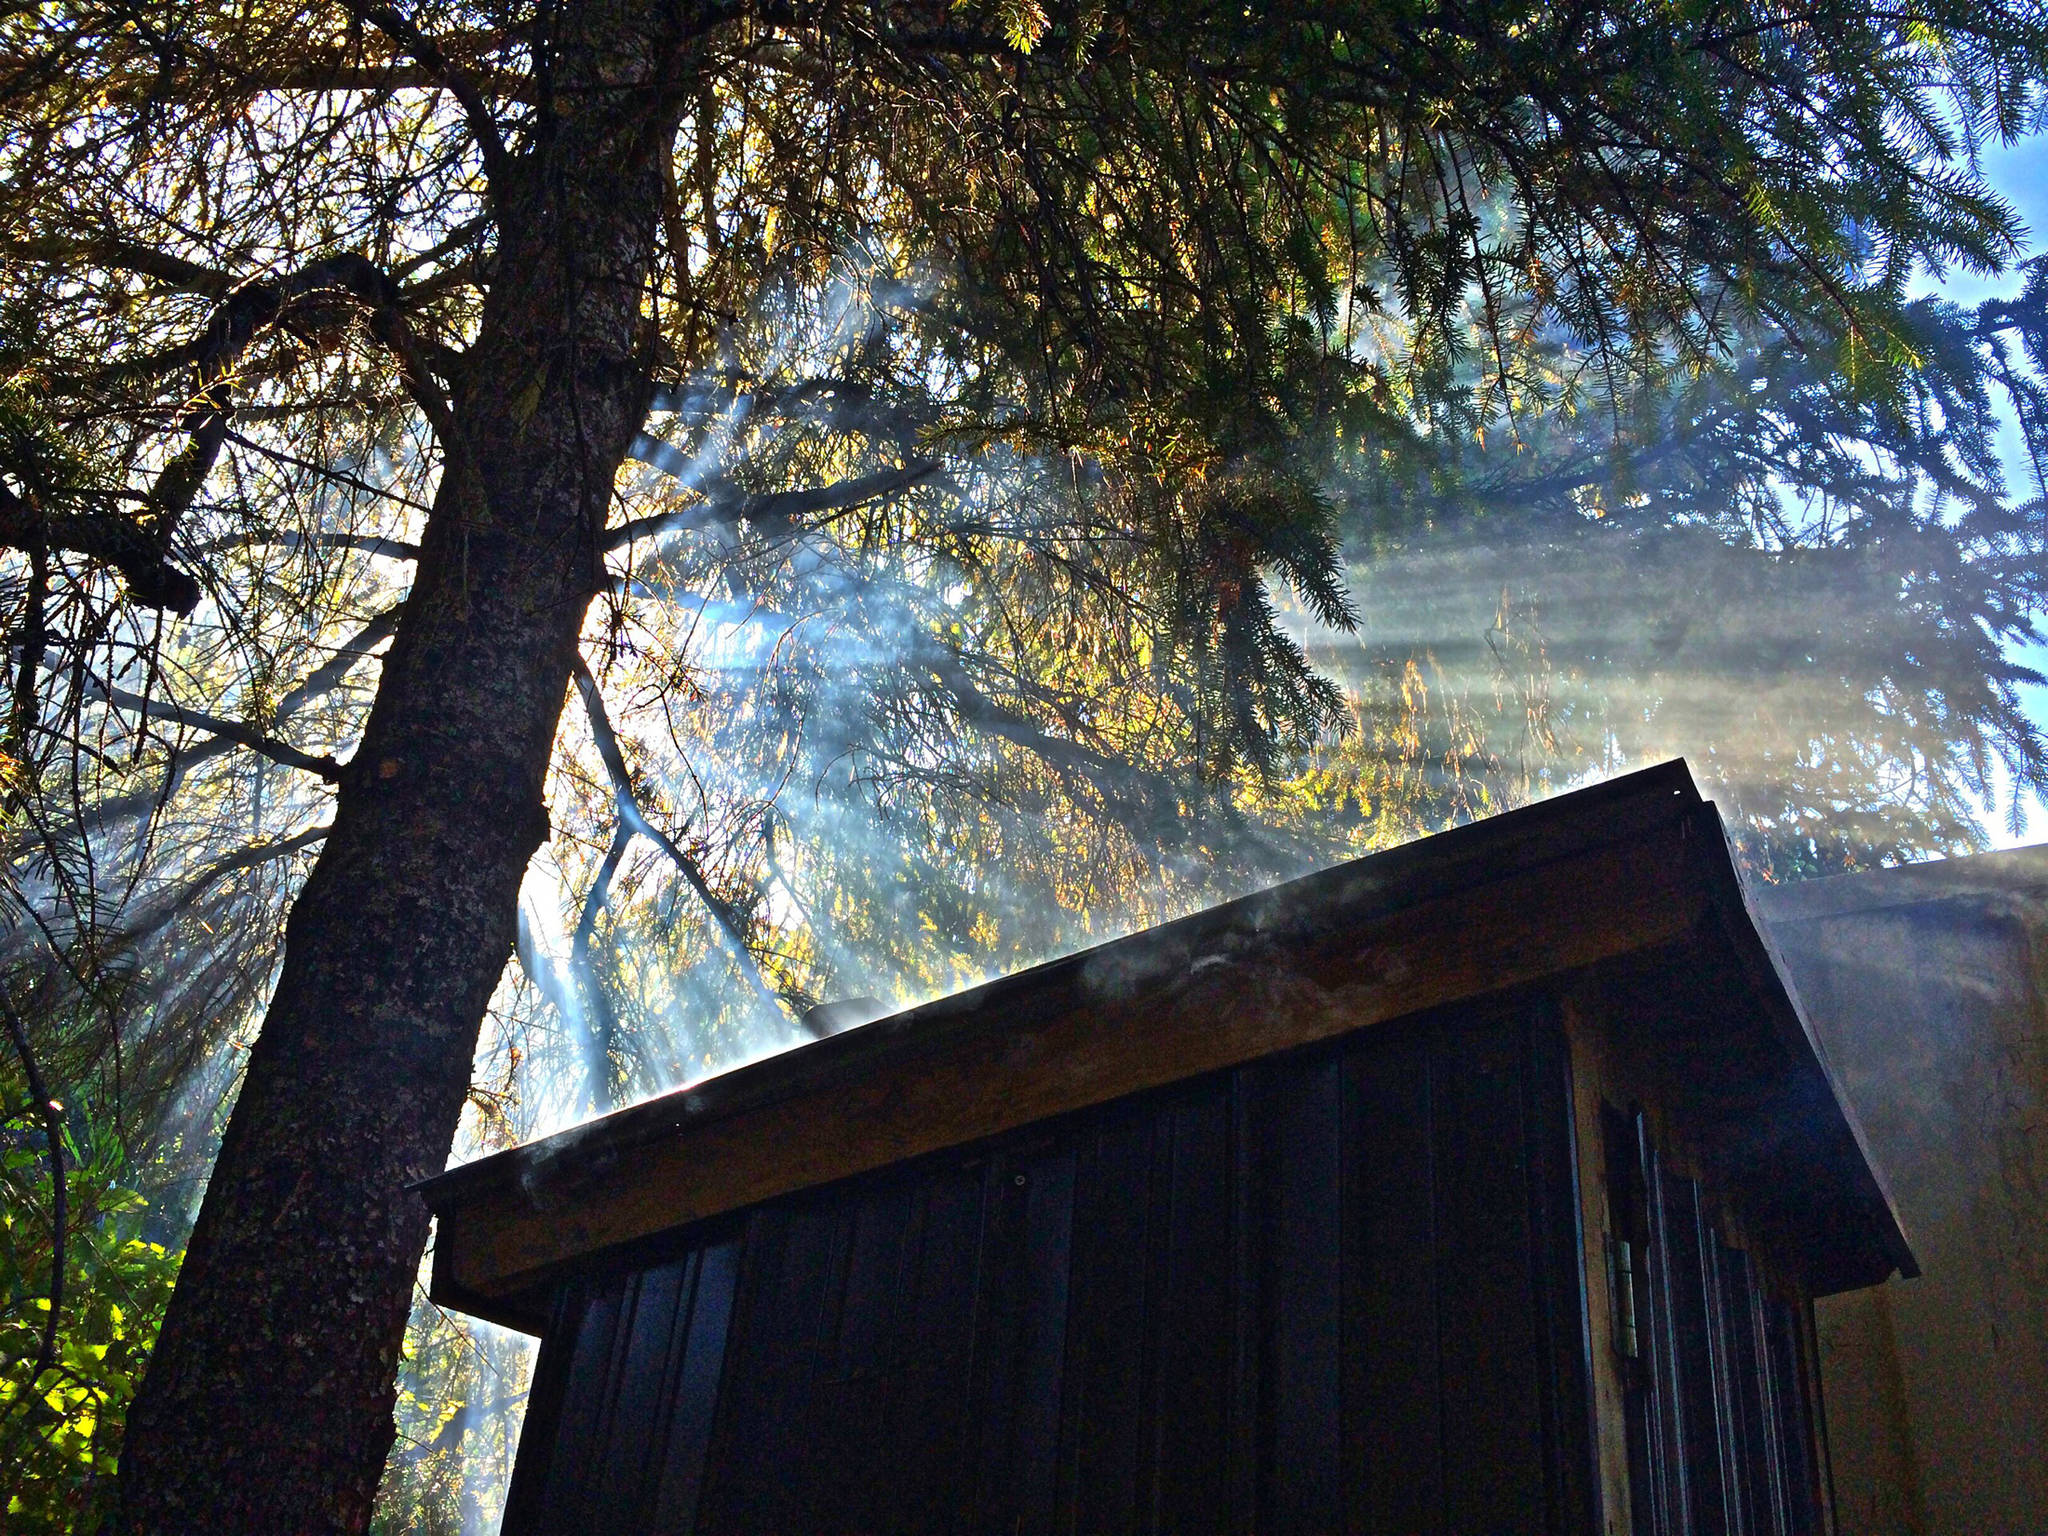 Light streams in through the trees above Mickey’s Fish Camp in Wrangell. Photo by Vivian Faith Prescott.